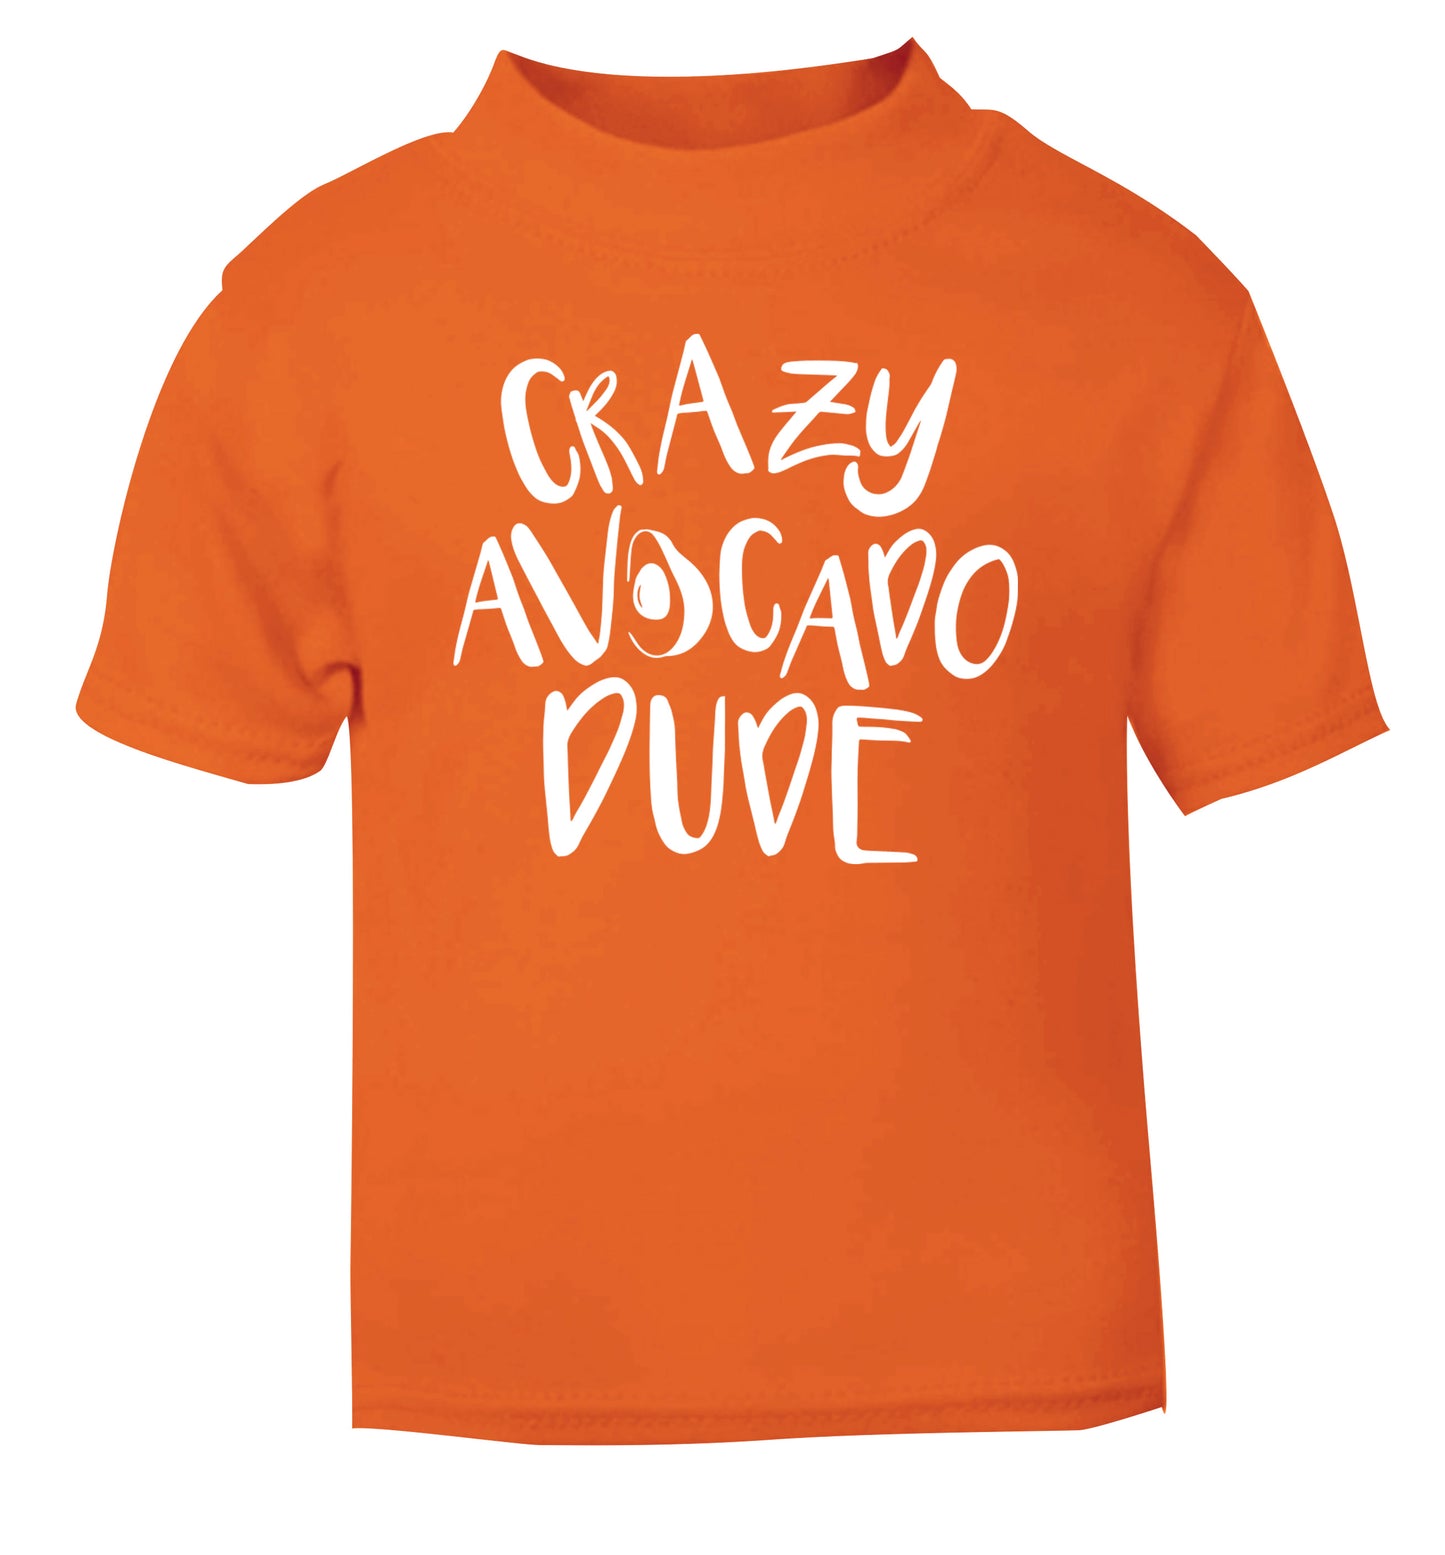 Crazy avocado dude orange Baby Toddler Tshirt 2 Years